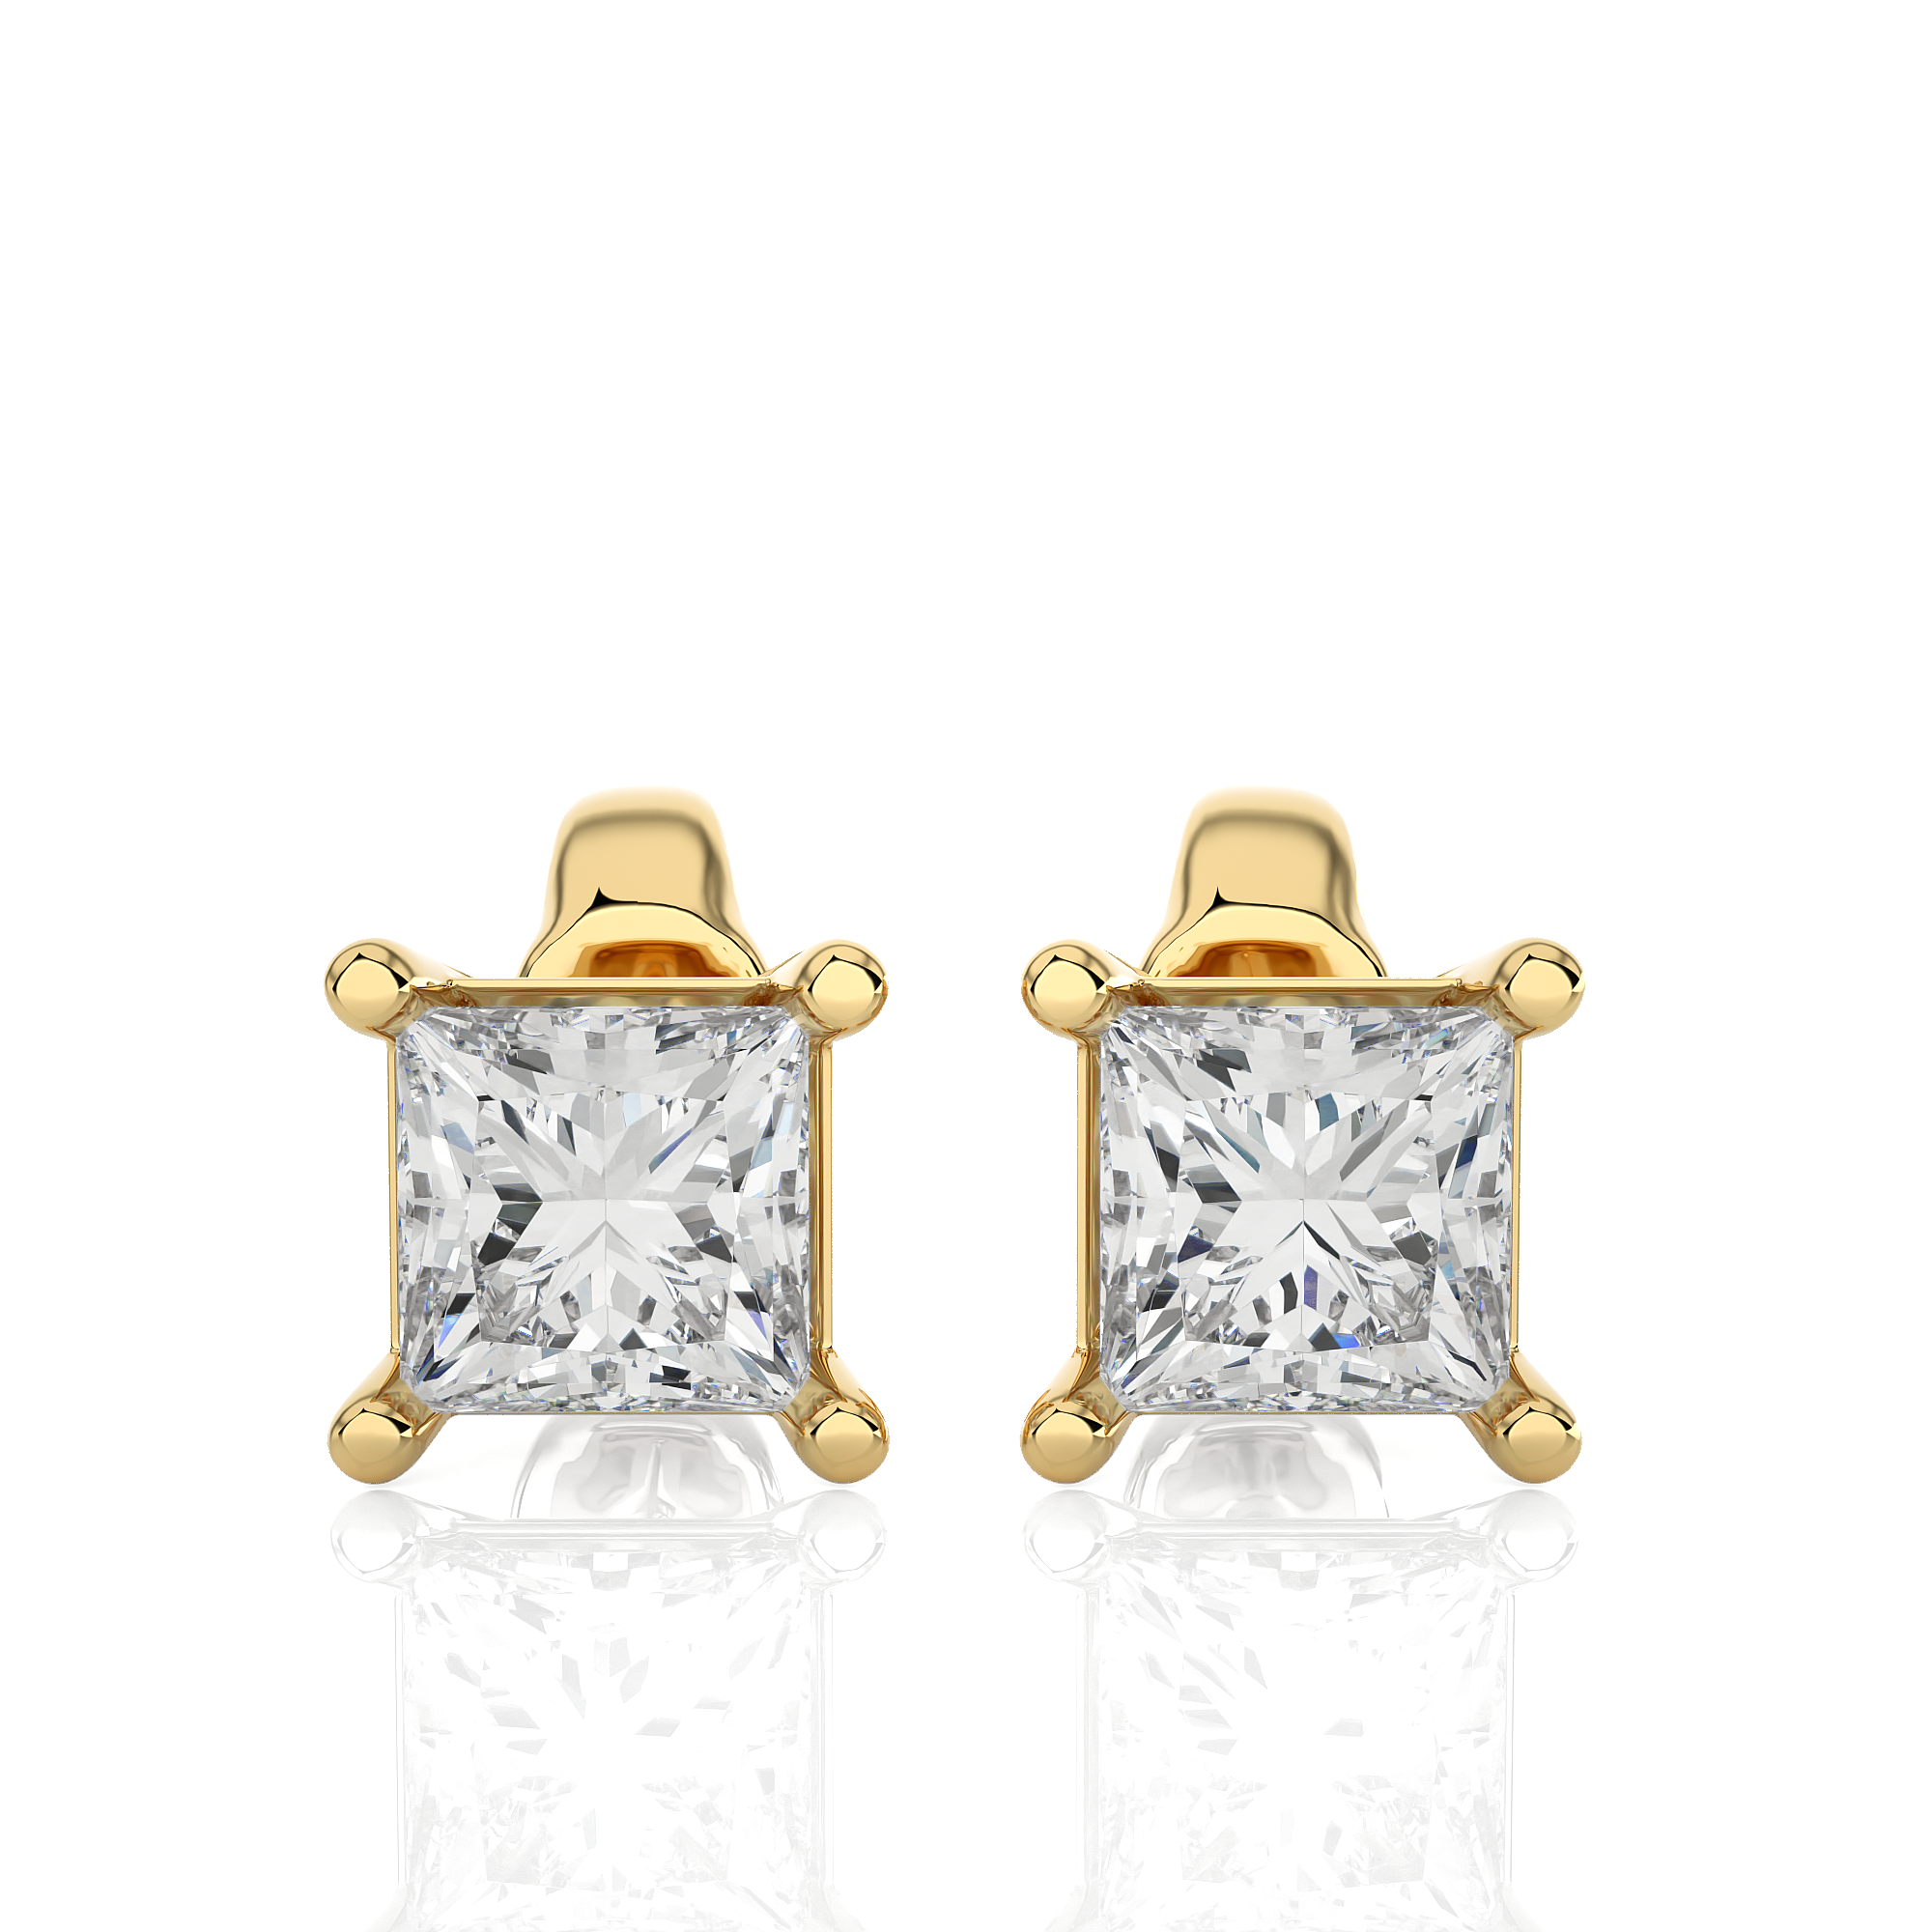 1Ct Princess Shaped Diamond Stud Earrings in 14kt Gold - Blu Diamonds